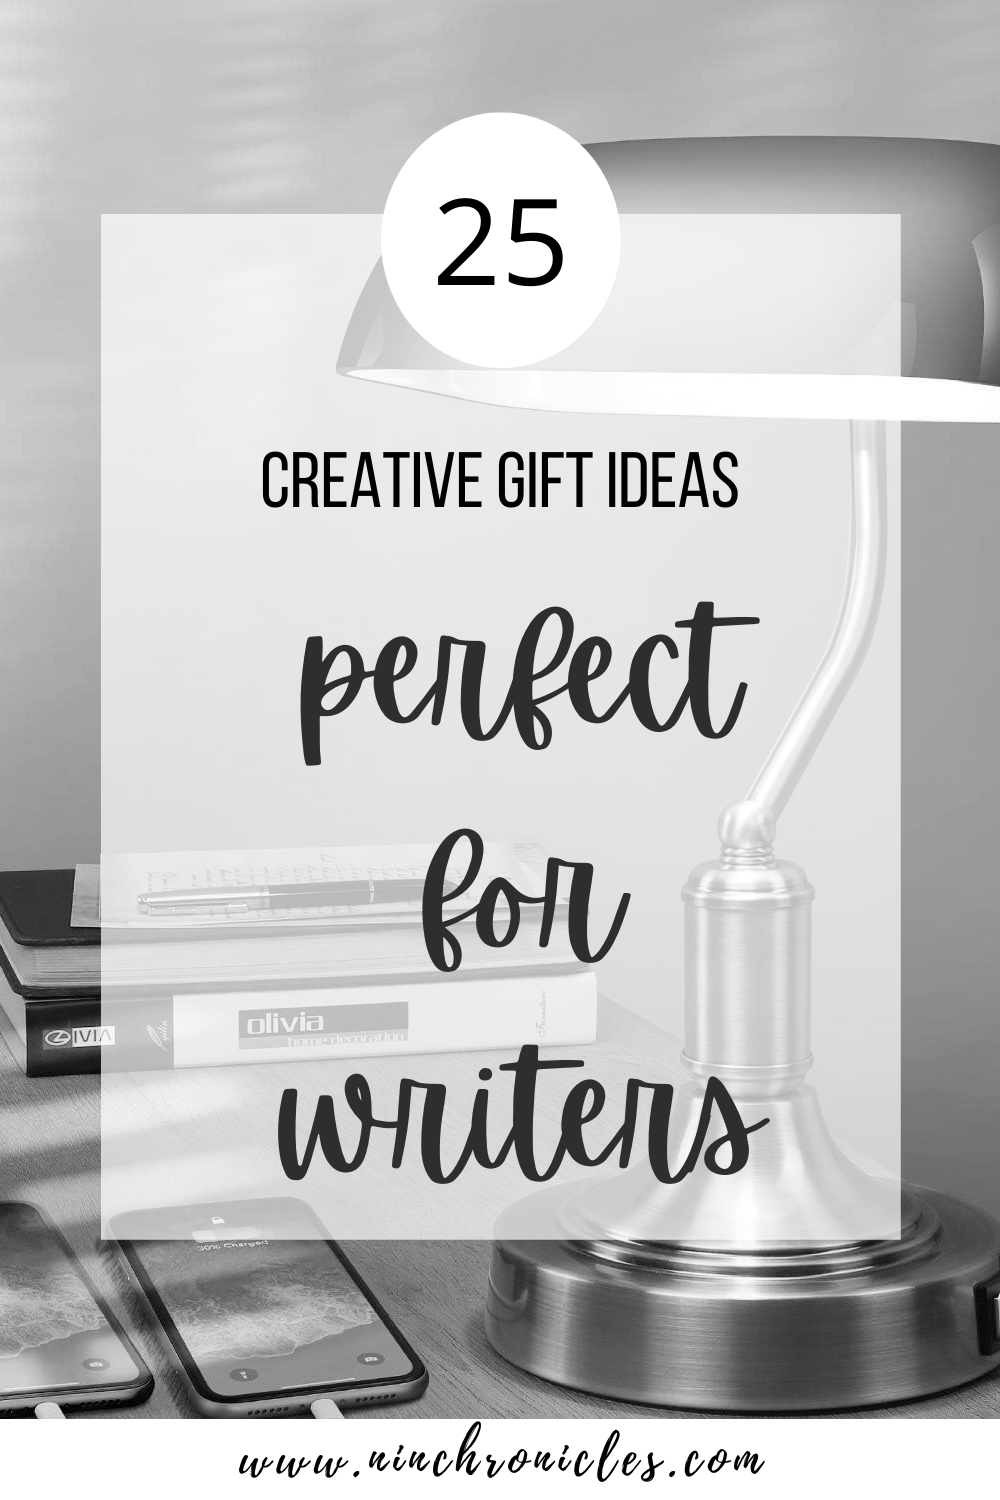 creative writing gift ideas